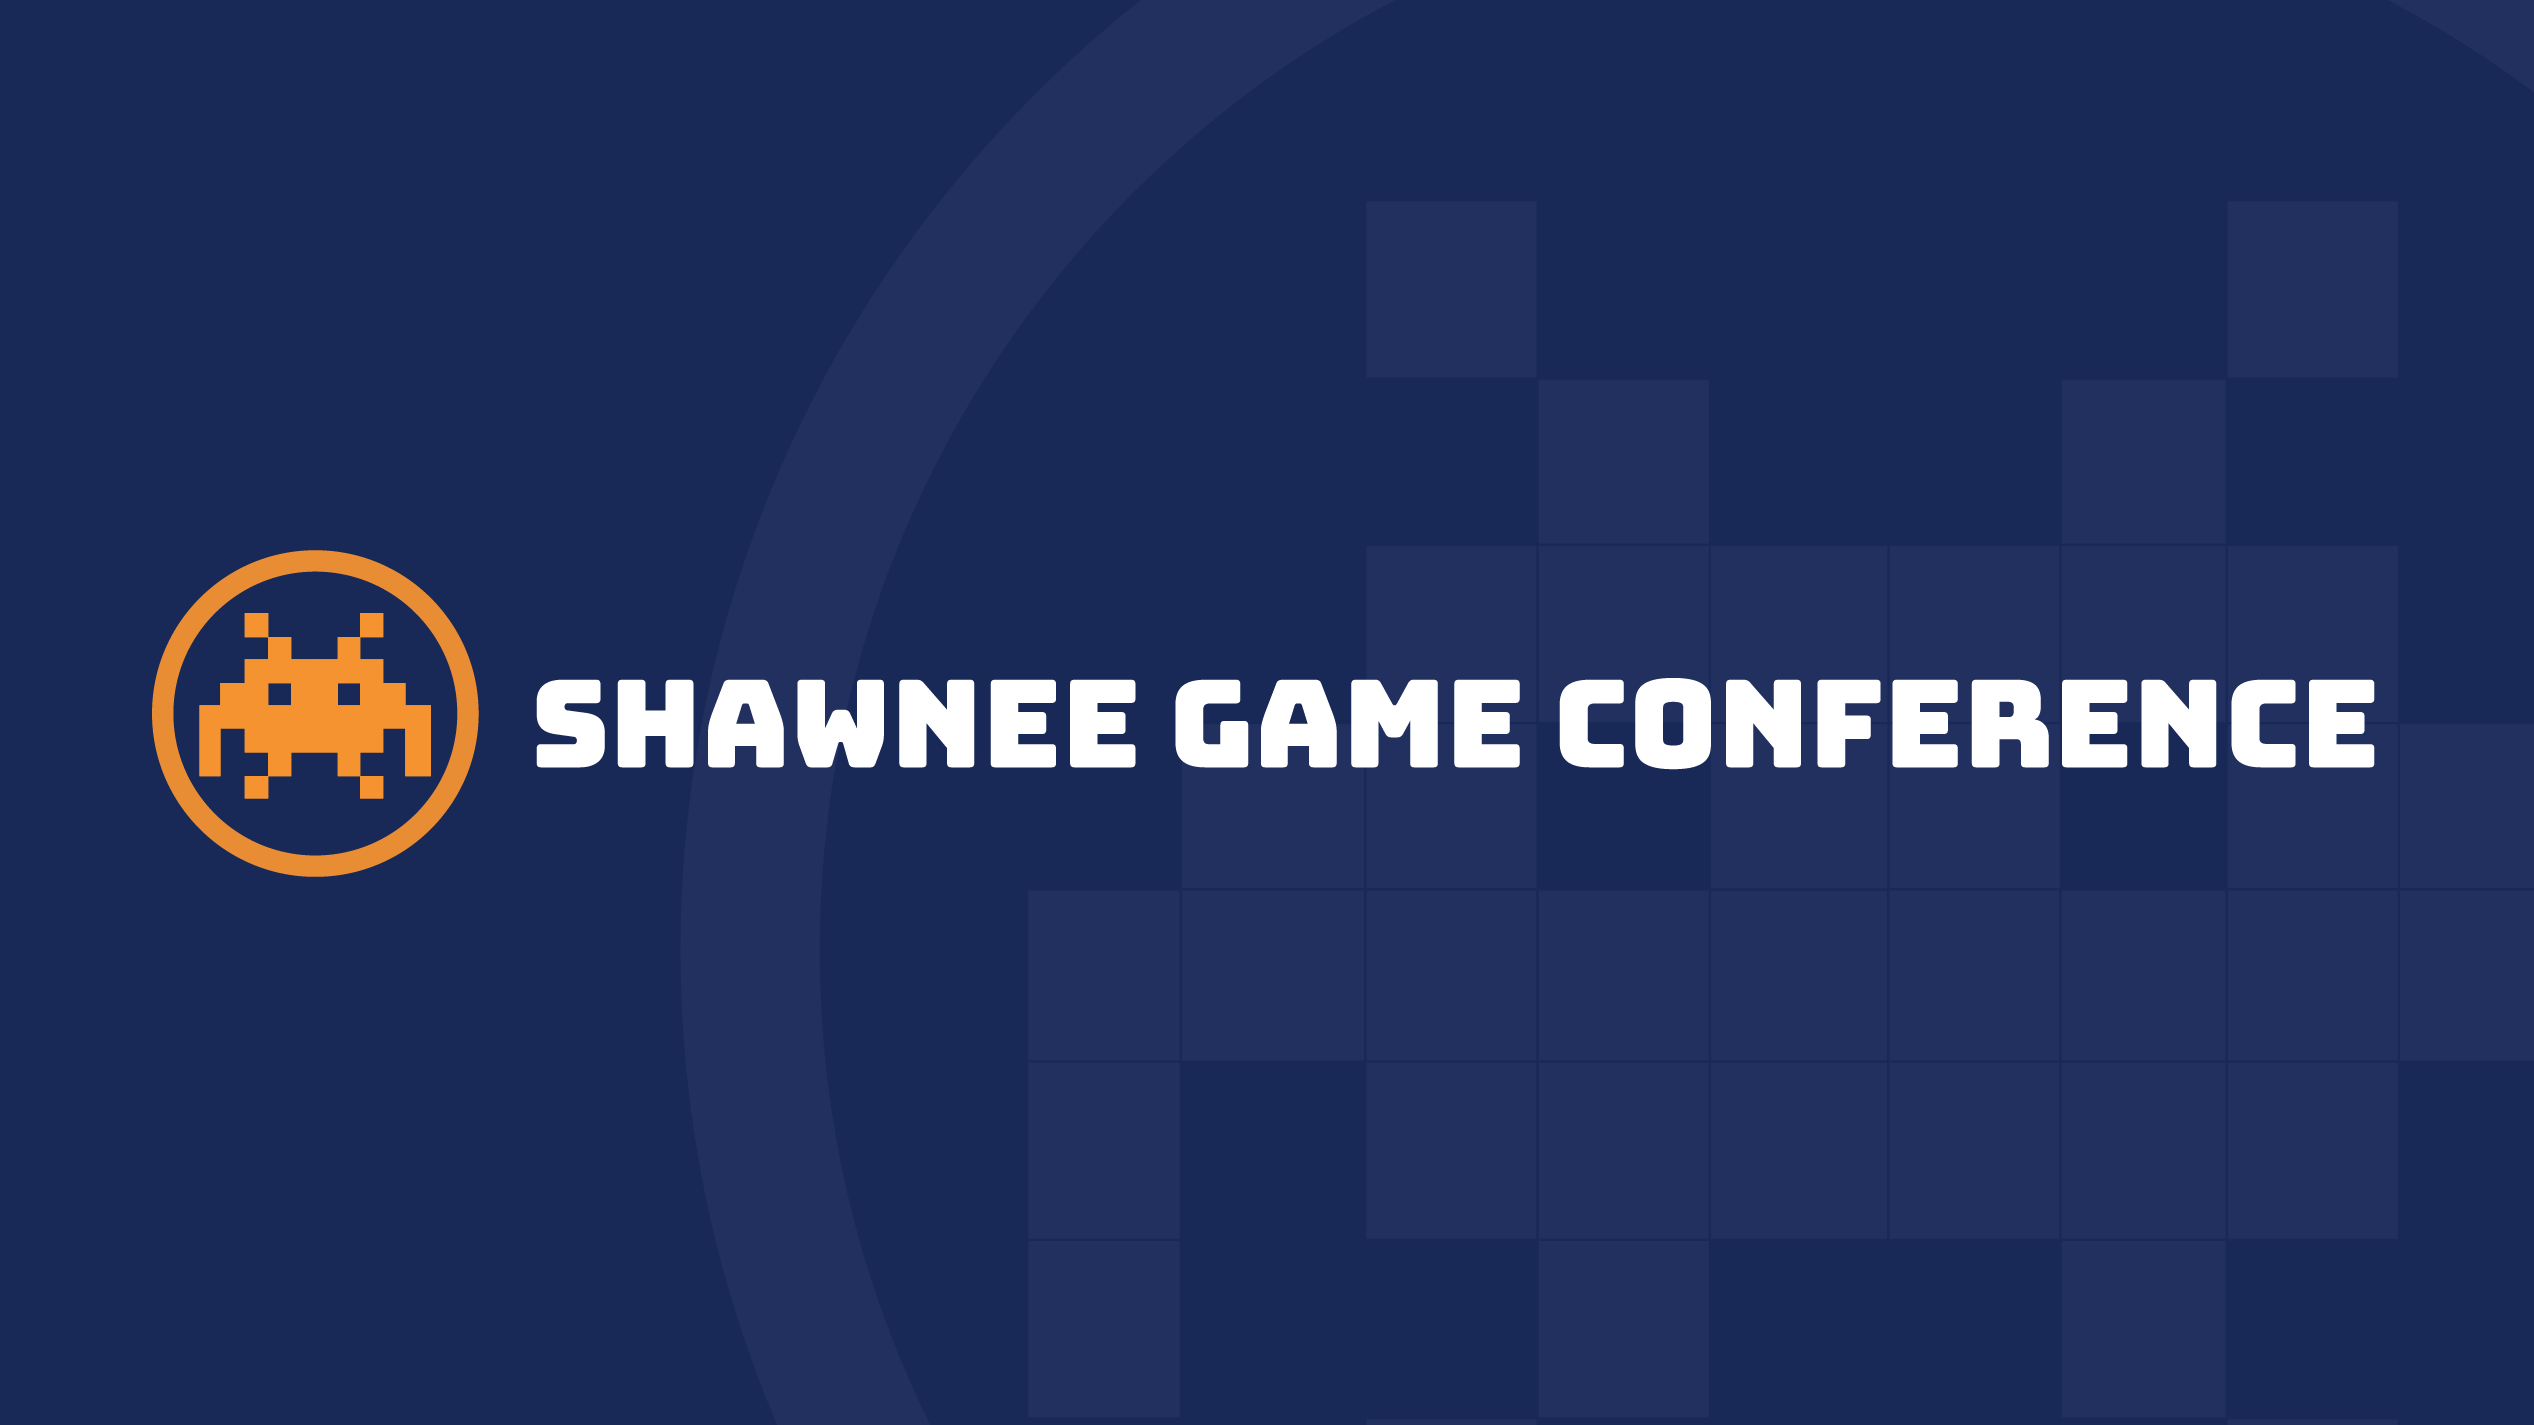 Shawnee Game Conference logo